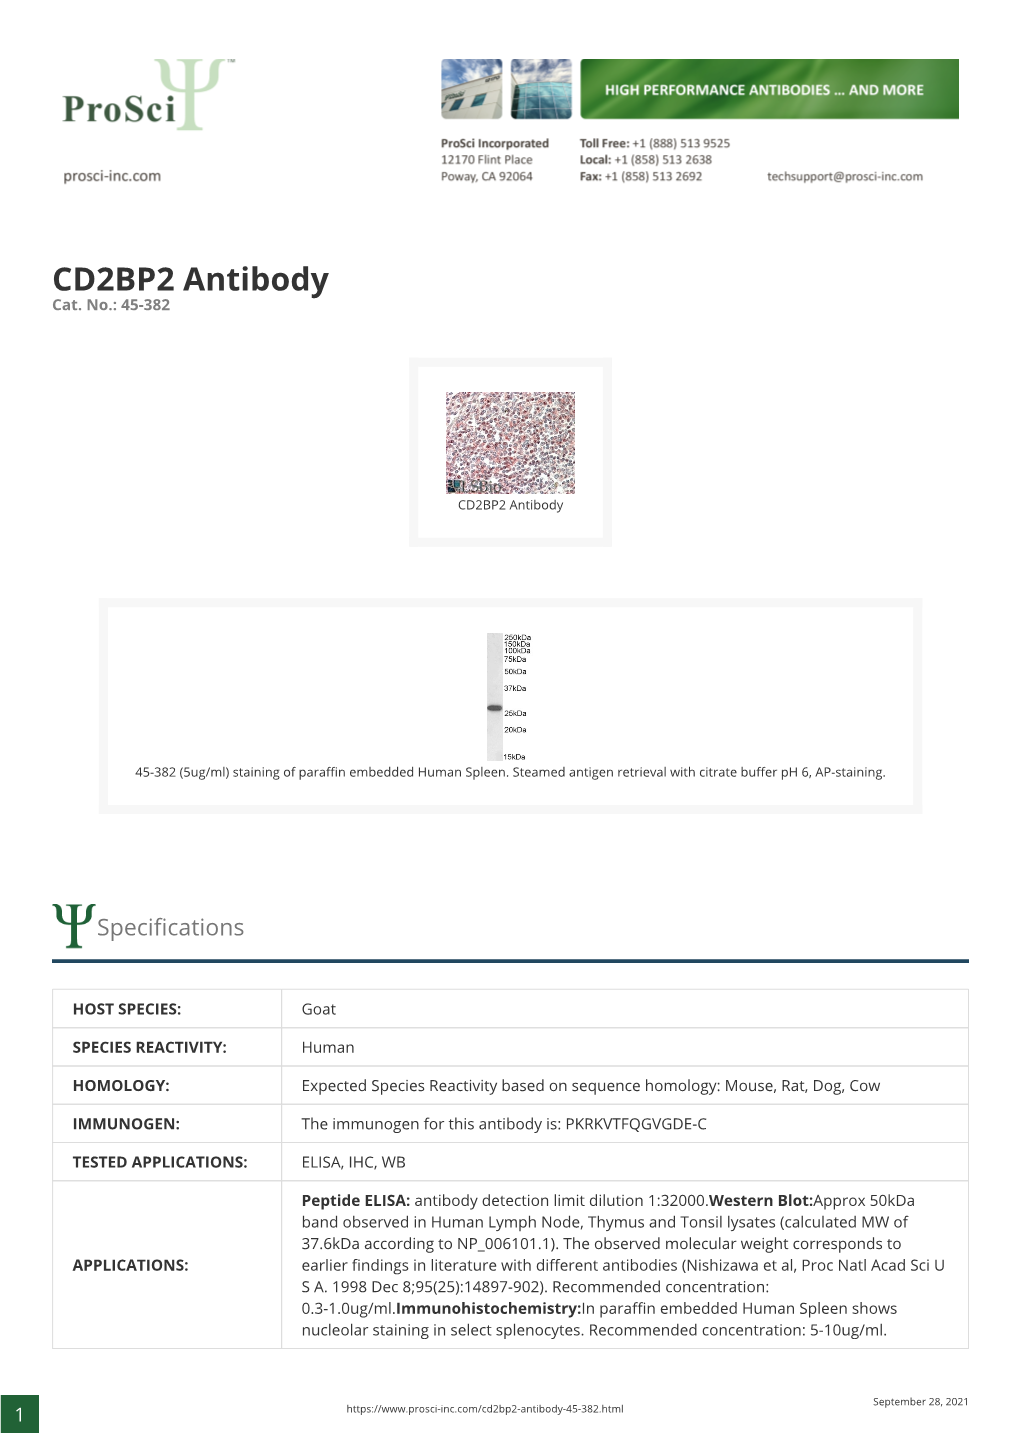 CD2BP2 Antibody Cat